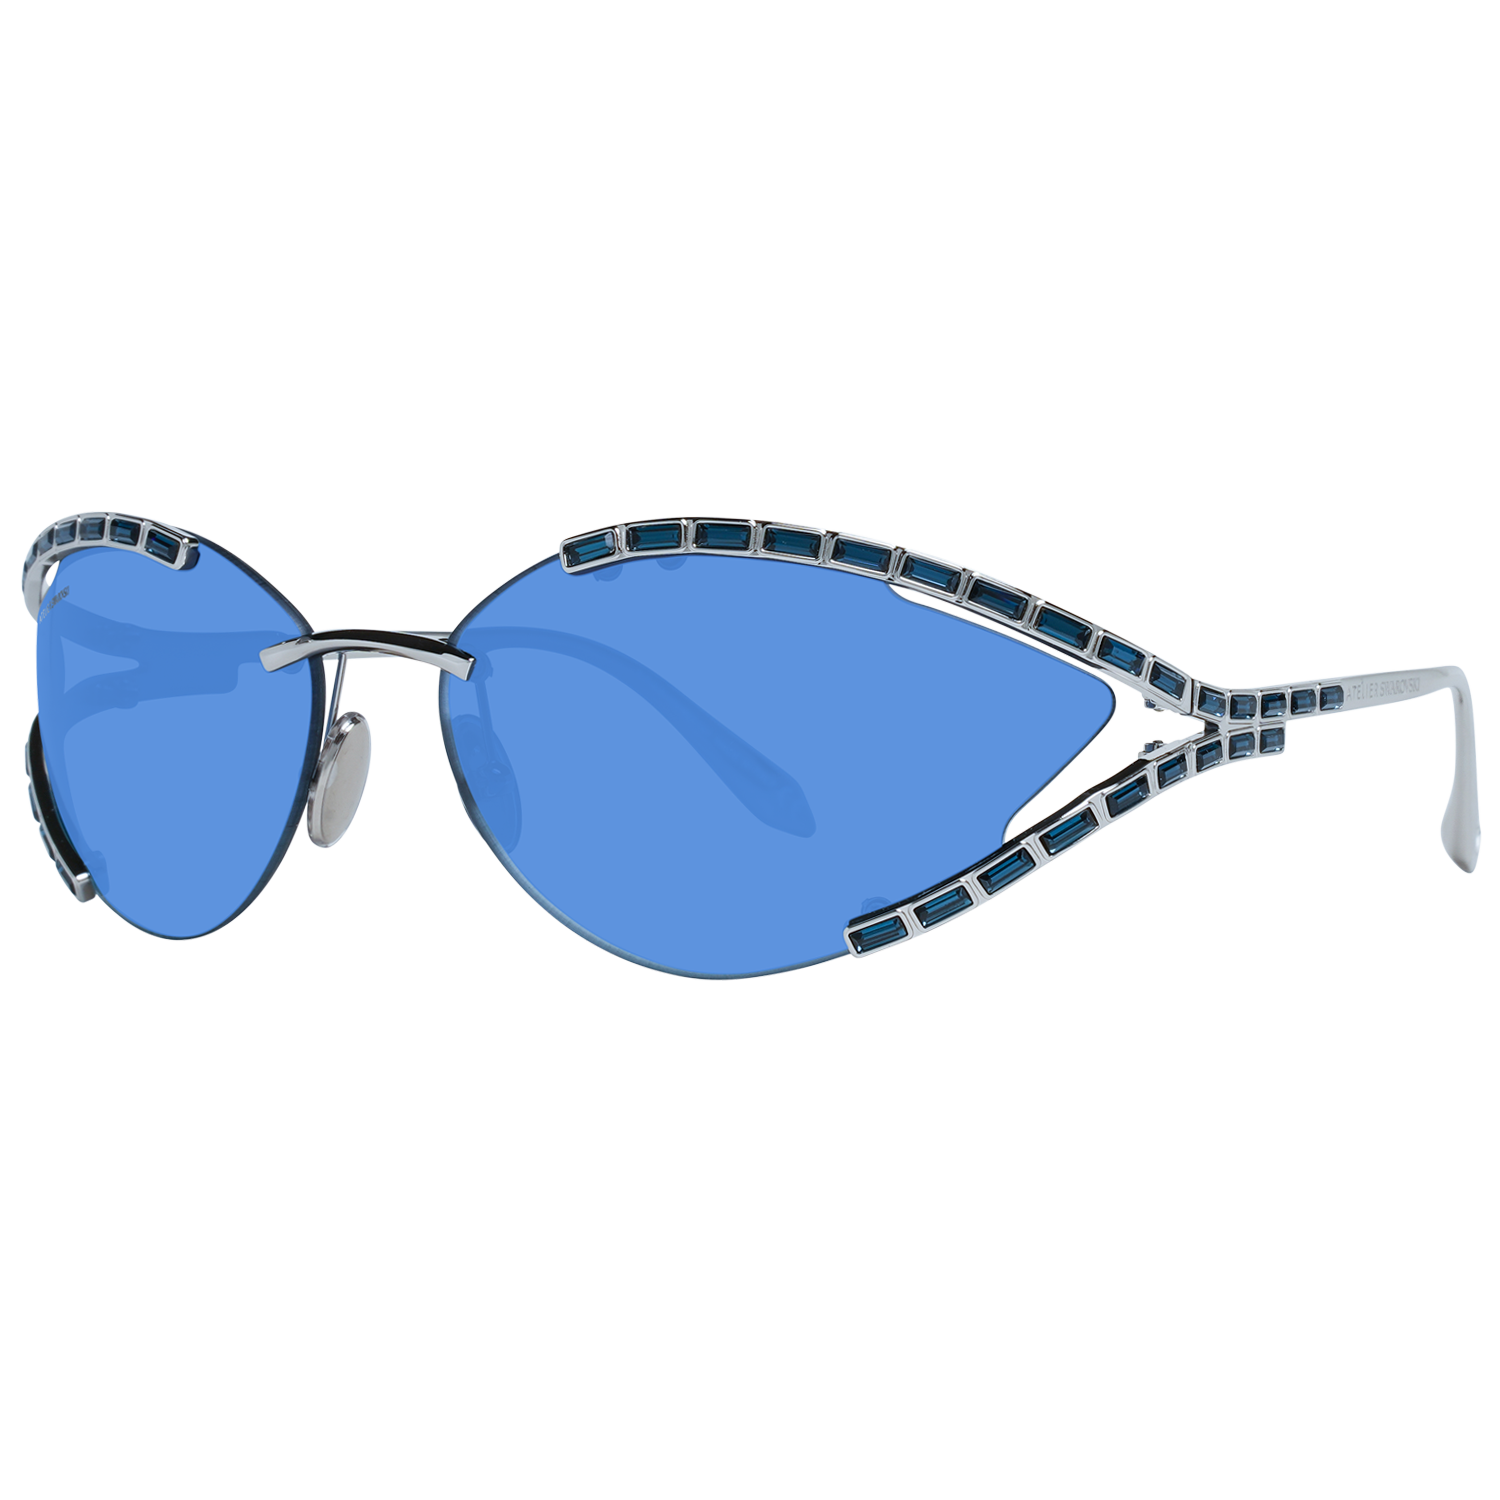 Atelier Swarovski Sunglasses Atelier Swarovski Sunglasses SK0273-P 66 16W Eyeglasses Eyewear UK USA Australia 